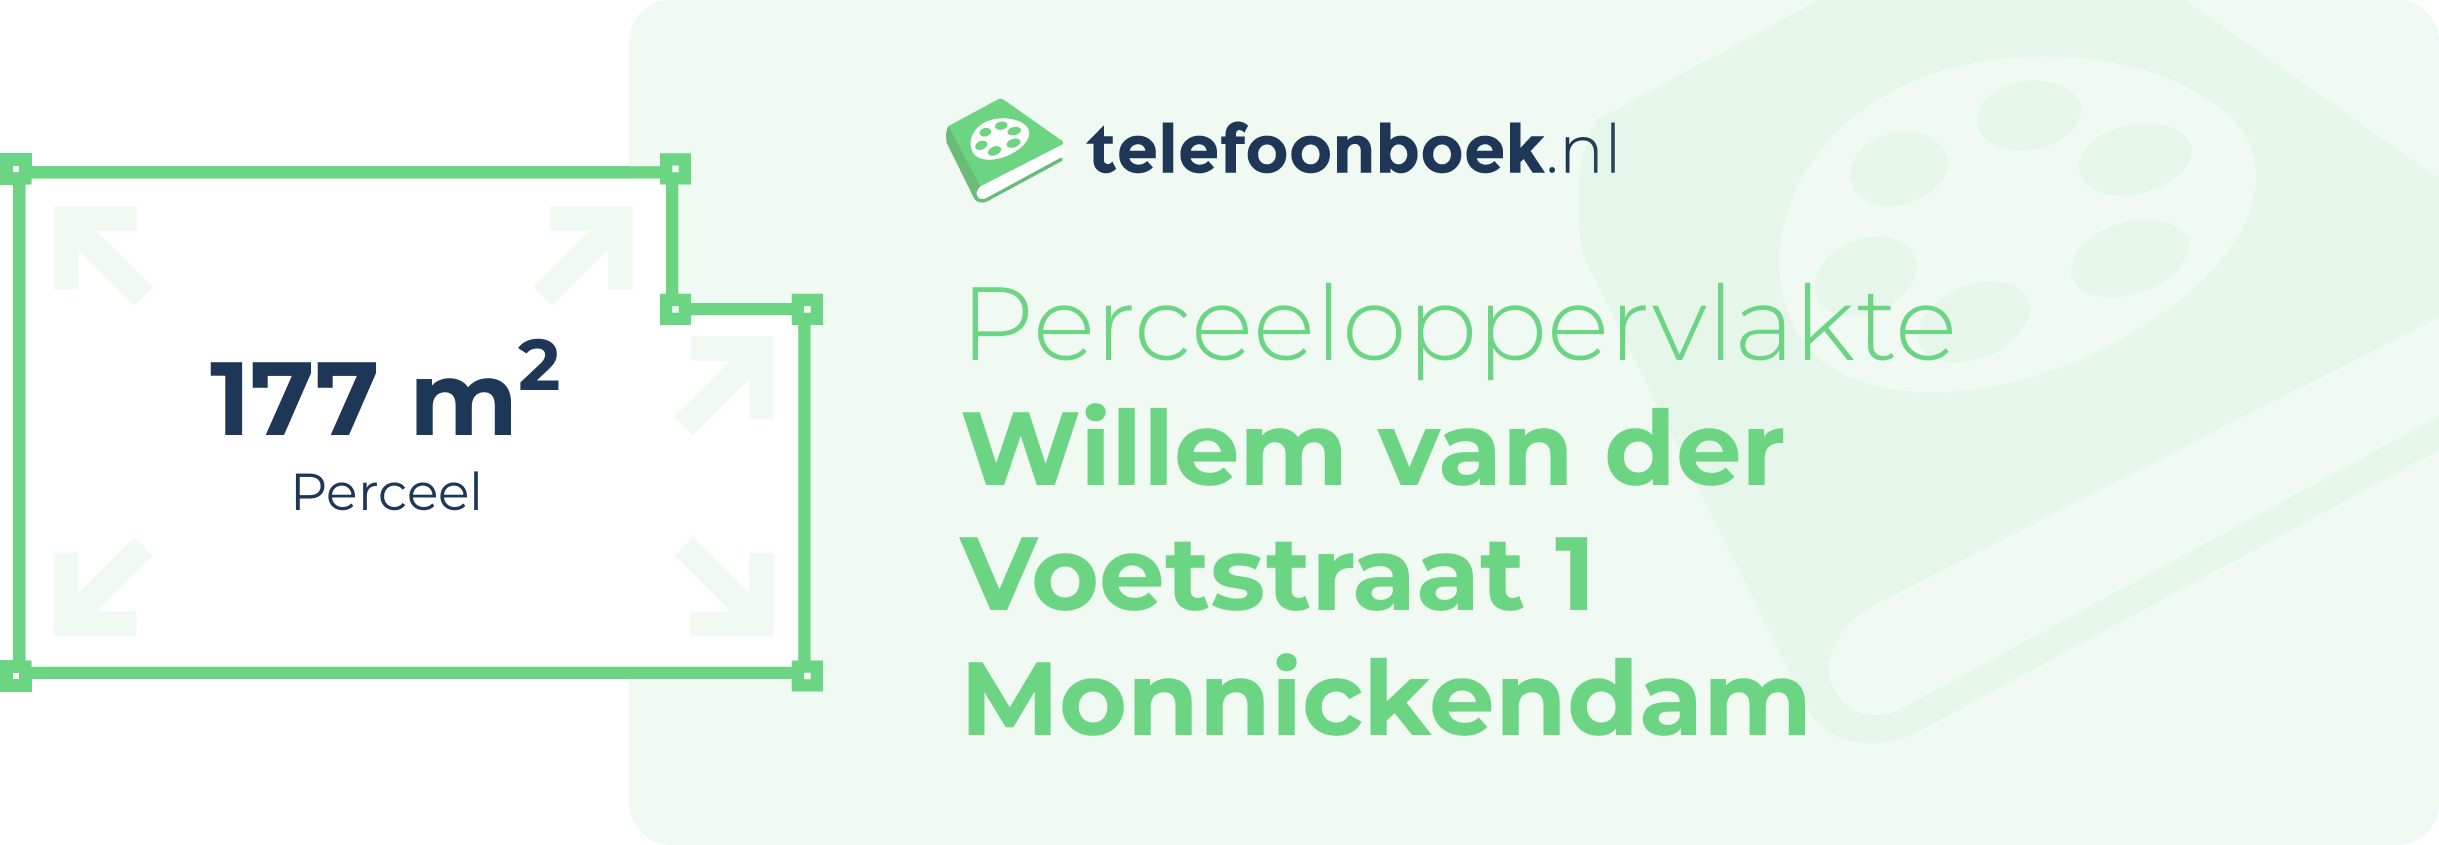 Perceeloppervlakte Willem Van Der Voetstraat 1 Monnickendam